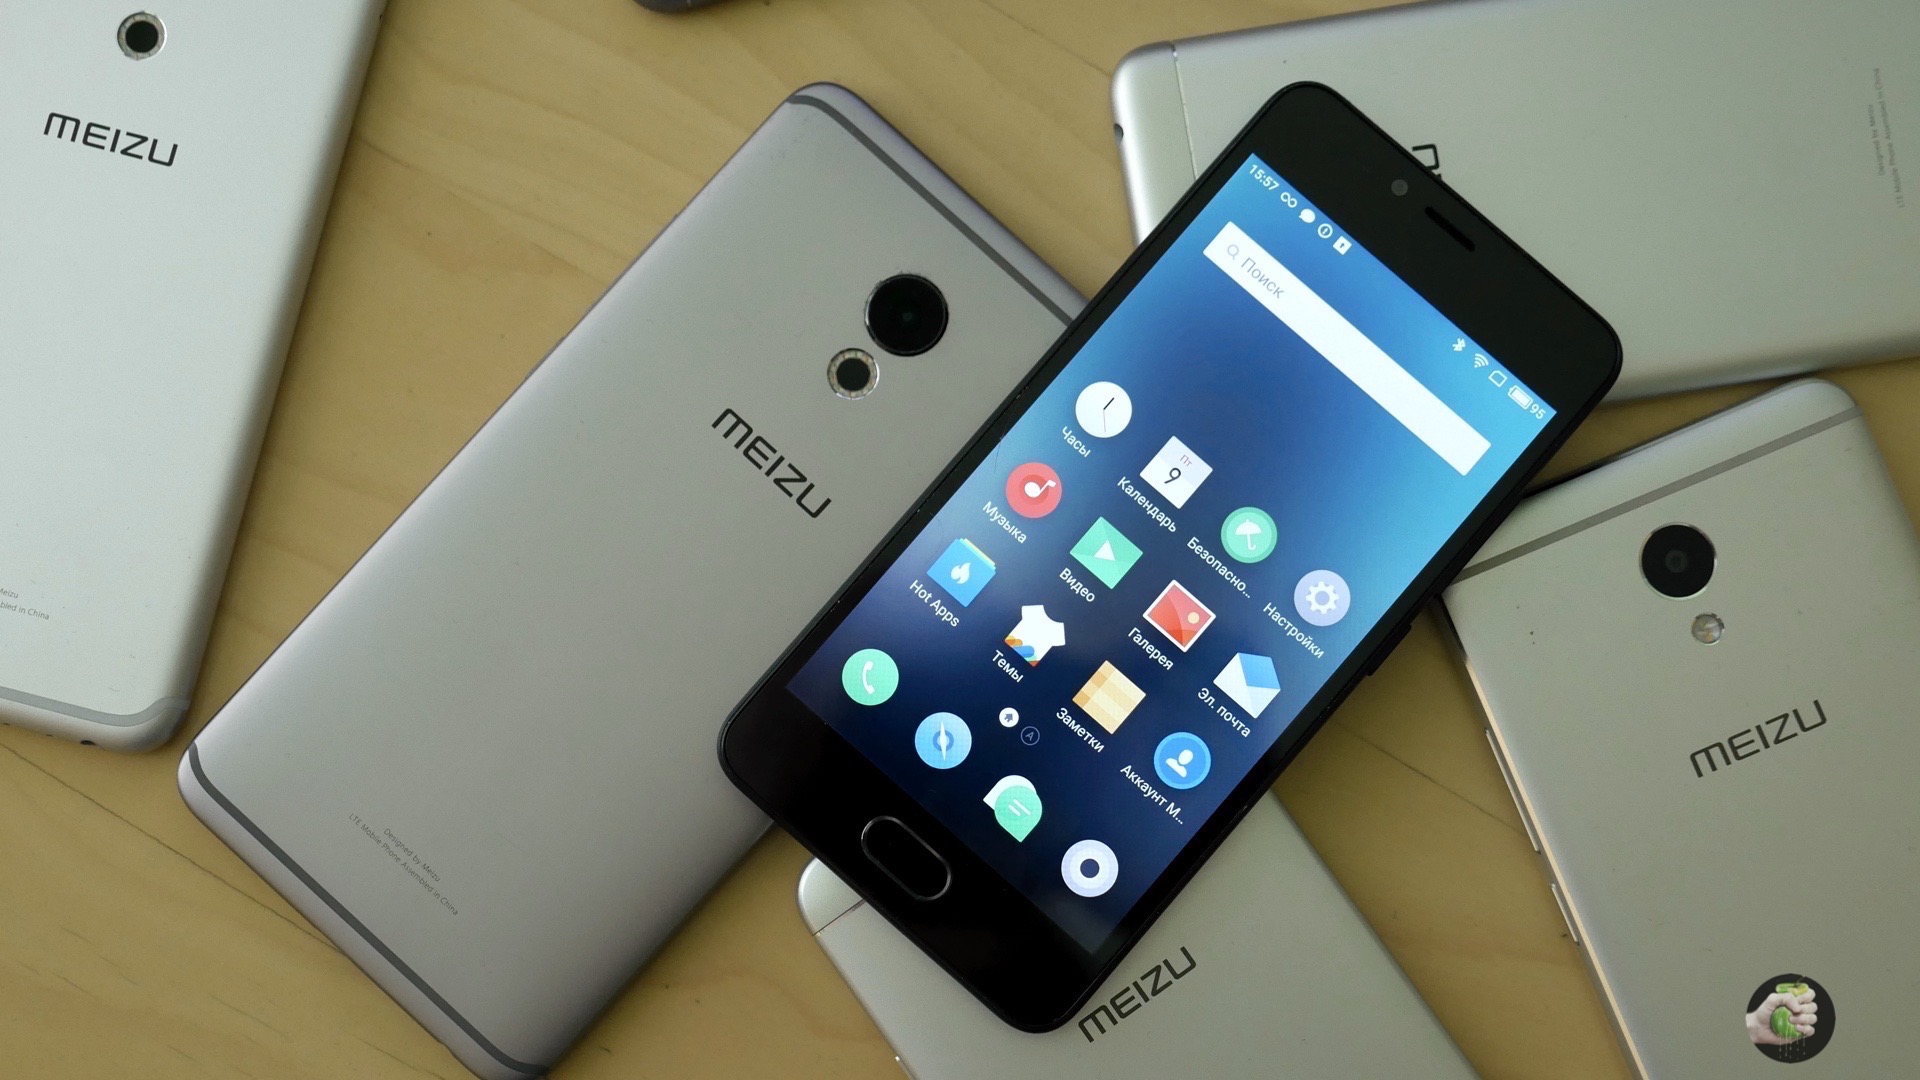 In the first half of 2018 Meizu will release 6 new smartphones